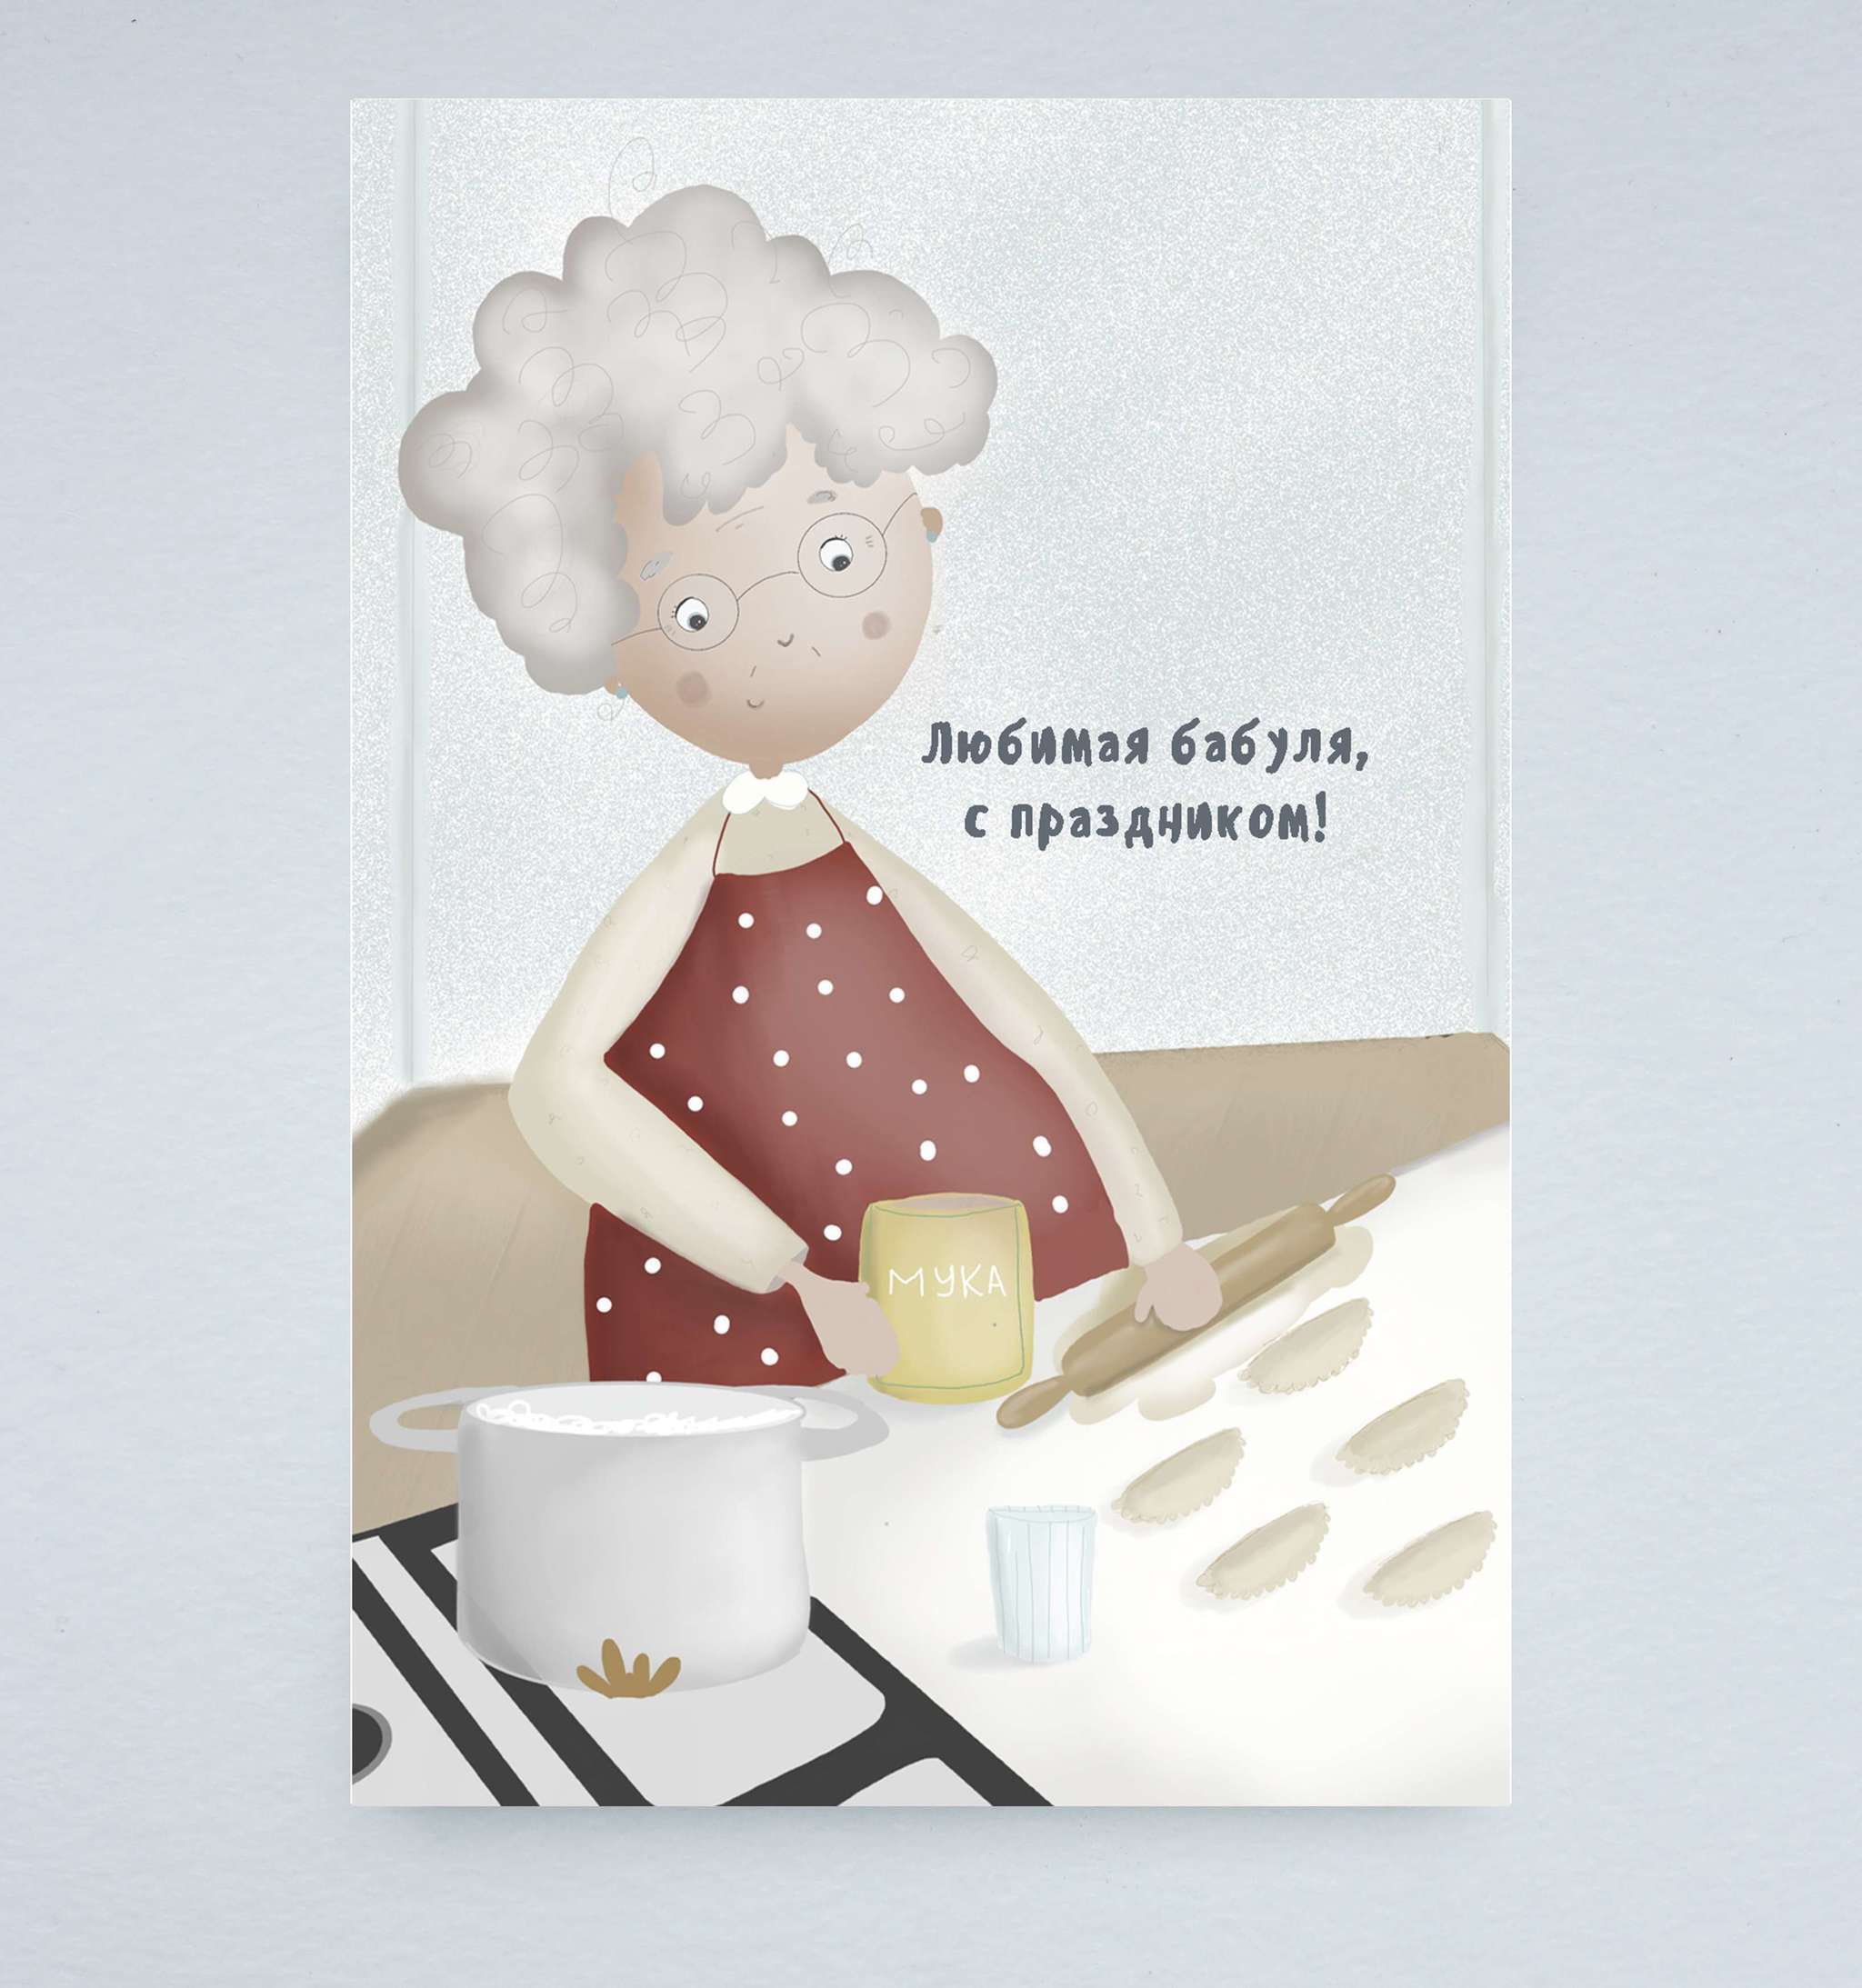 Песня бабуля бабуля люблю люблю. Открытка для бабушки. Открытка "любимой бабушке!". Милые открытки бабушке. Стильная открытка бабушке.